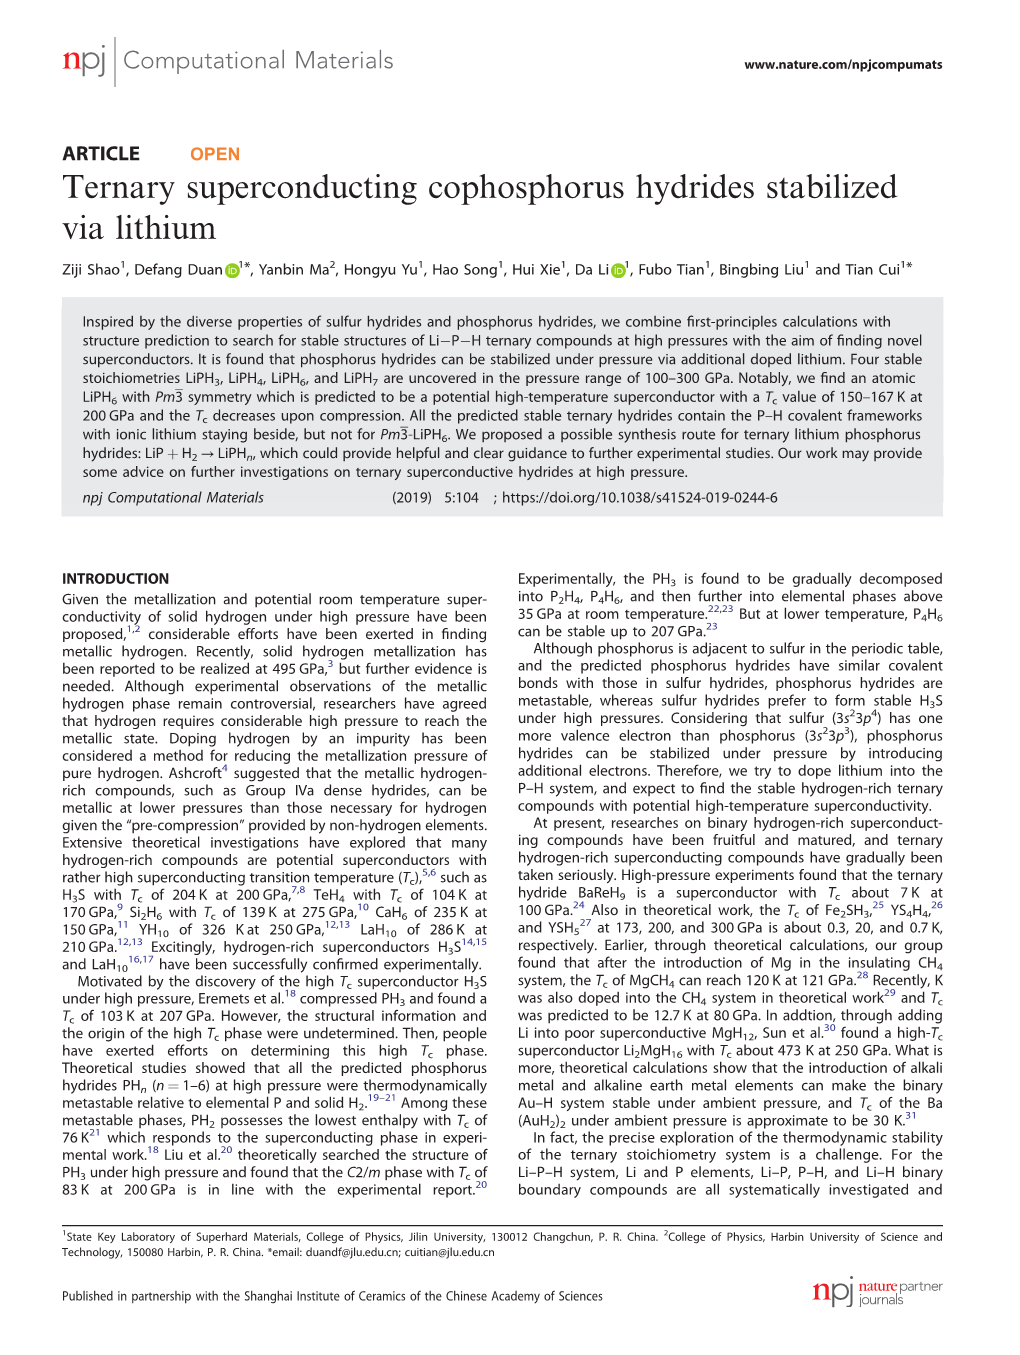 Ternary Superconducting Cophosphorus Hydrides Stabilized Via Lithium